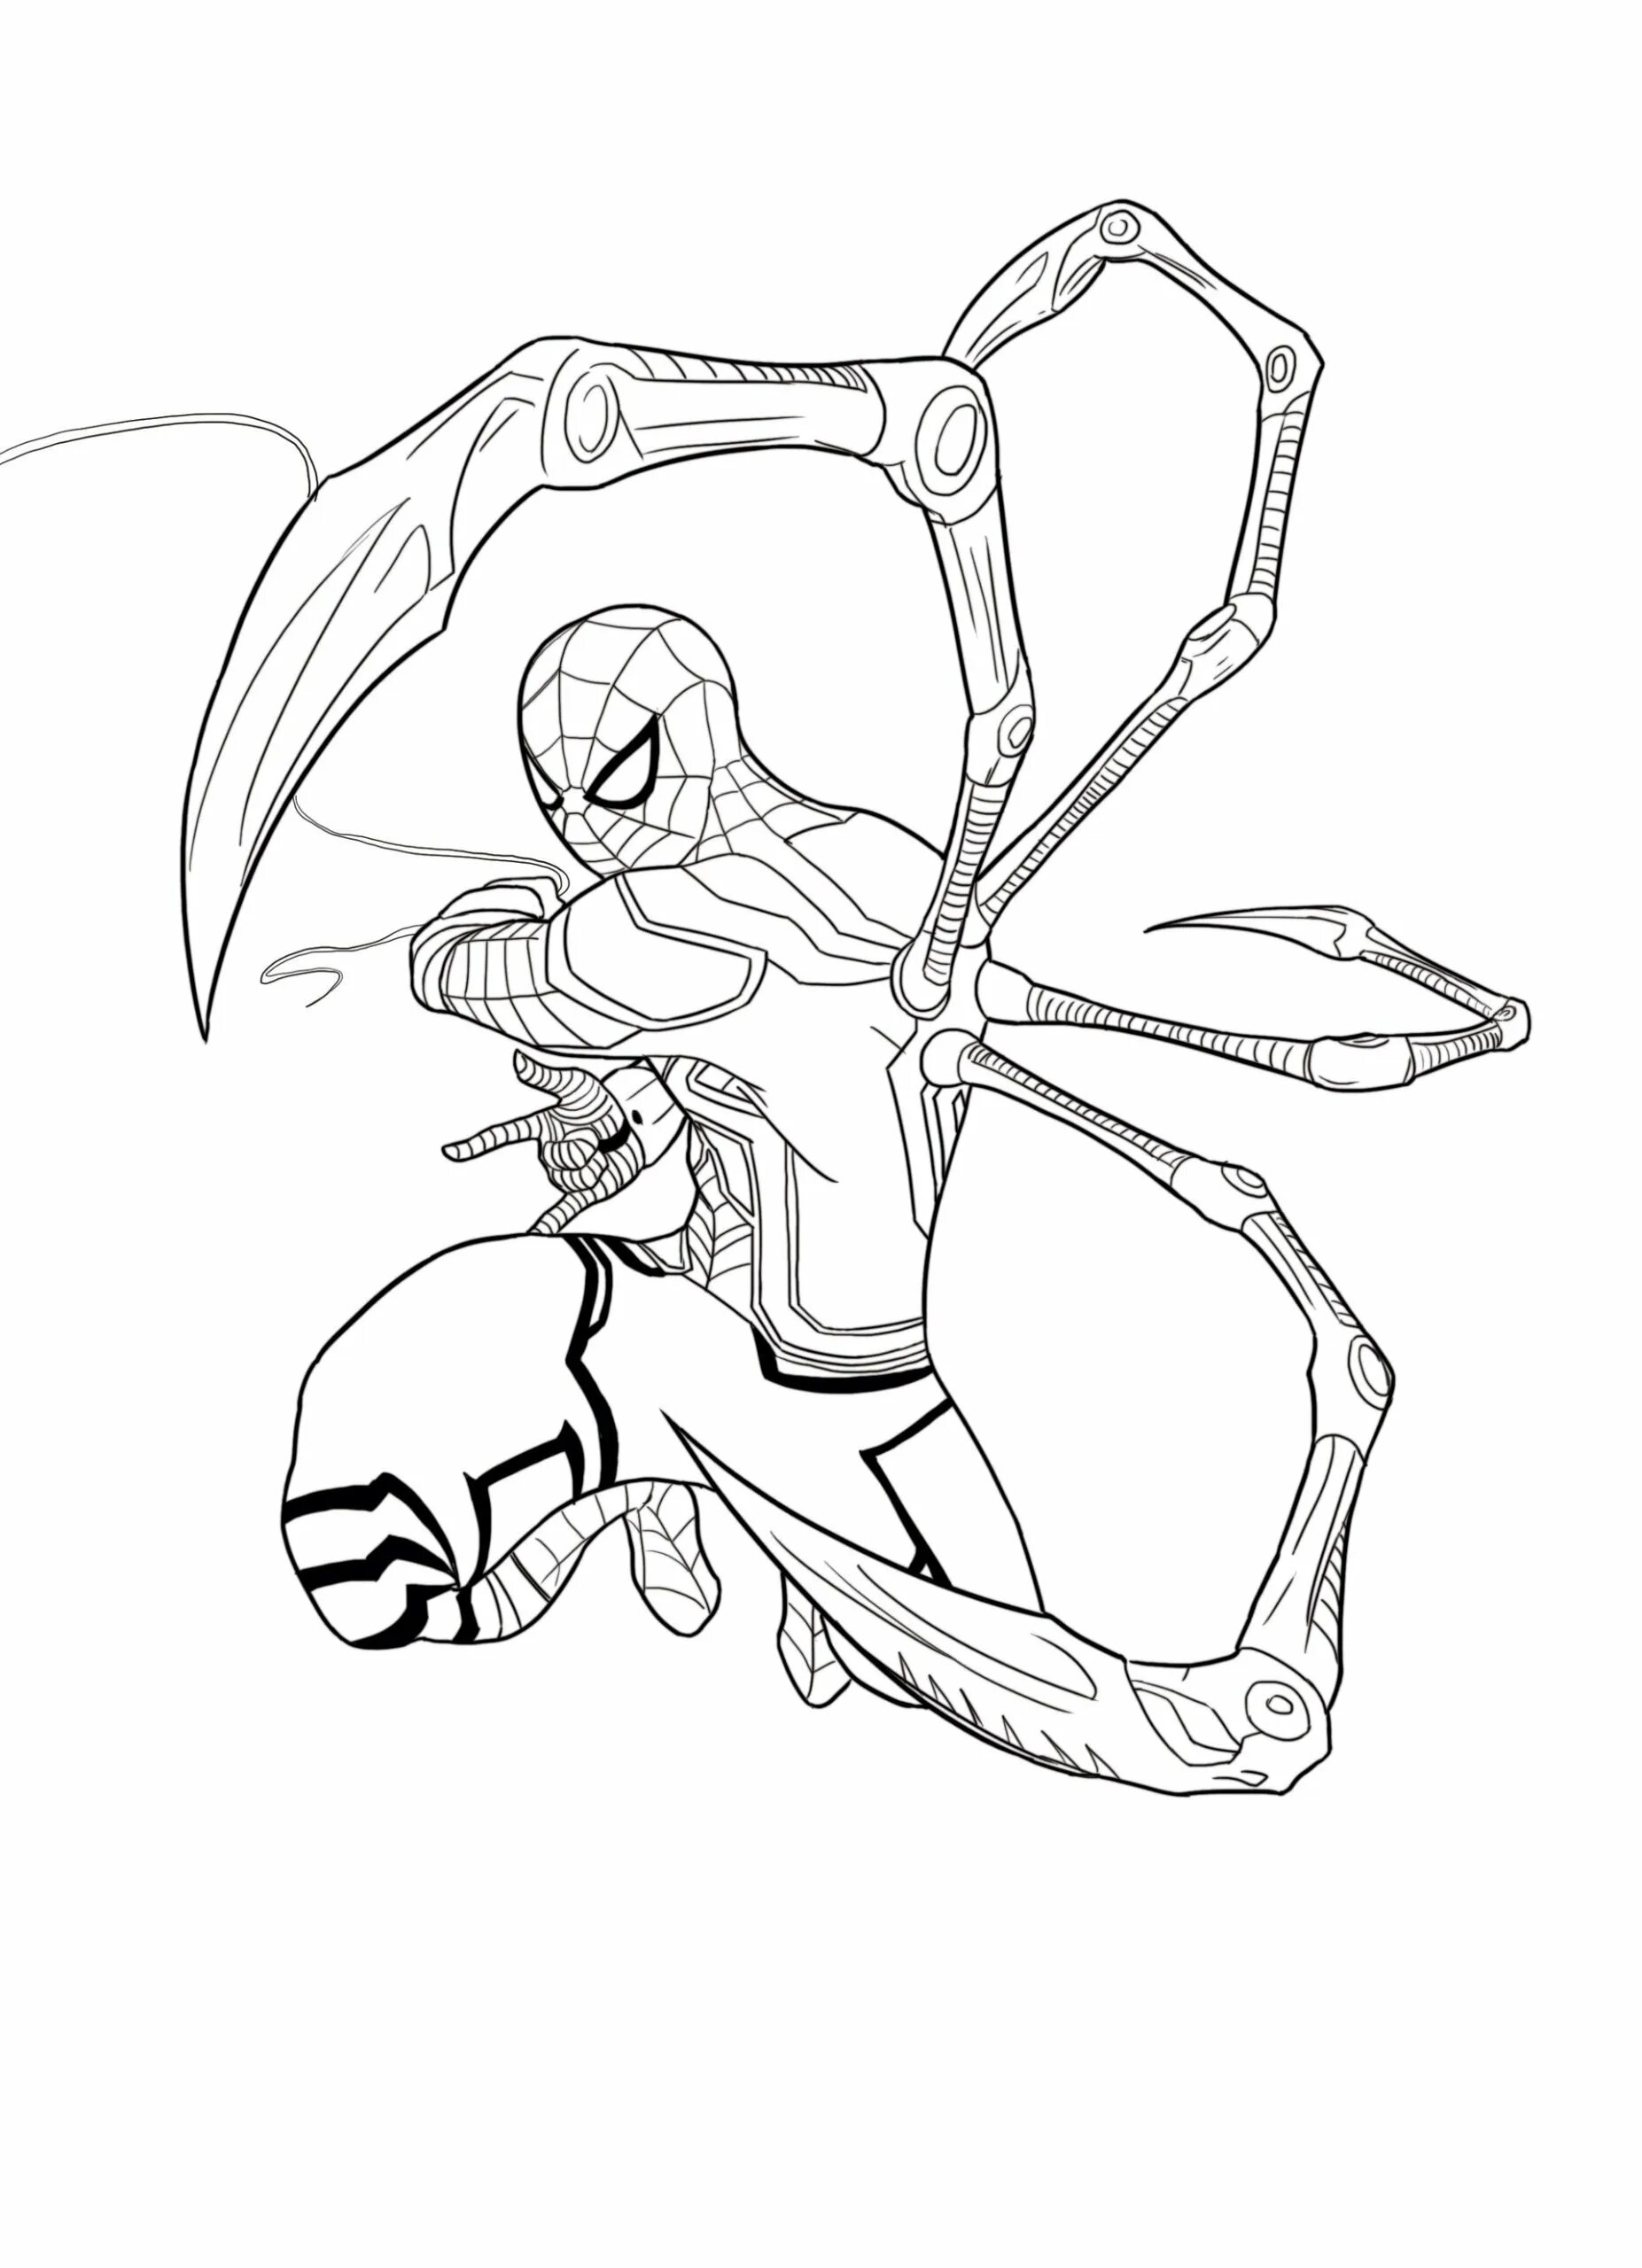 Железный паук раскраска. Разукрашка Железный человек паук. Железный человек паук раскраска. Человек паук раскраска Железный паук. Раскраски Марвел Железный человек паук.